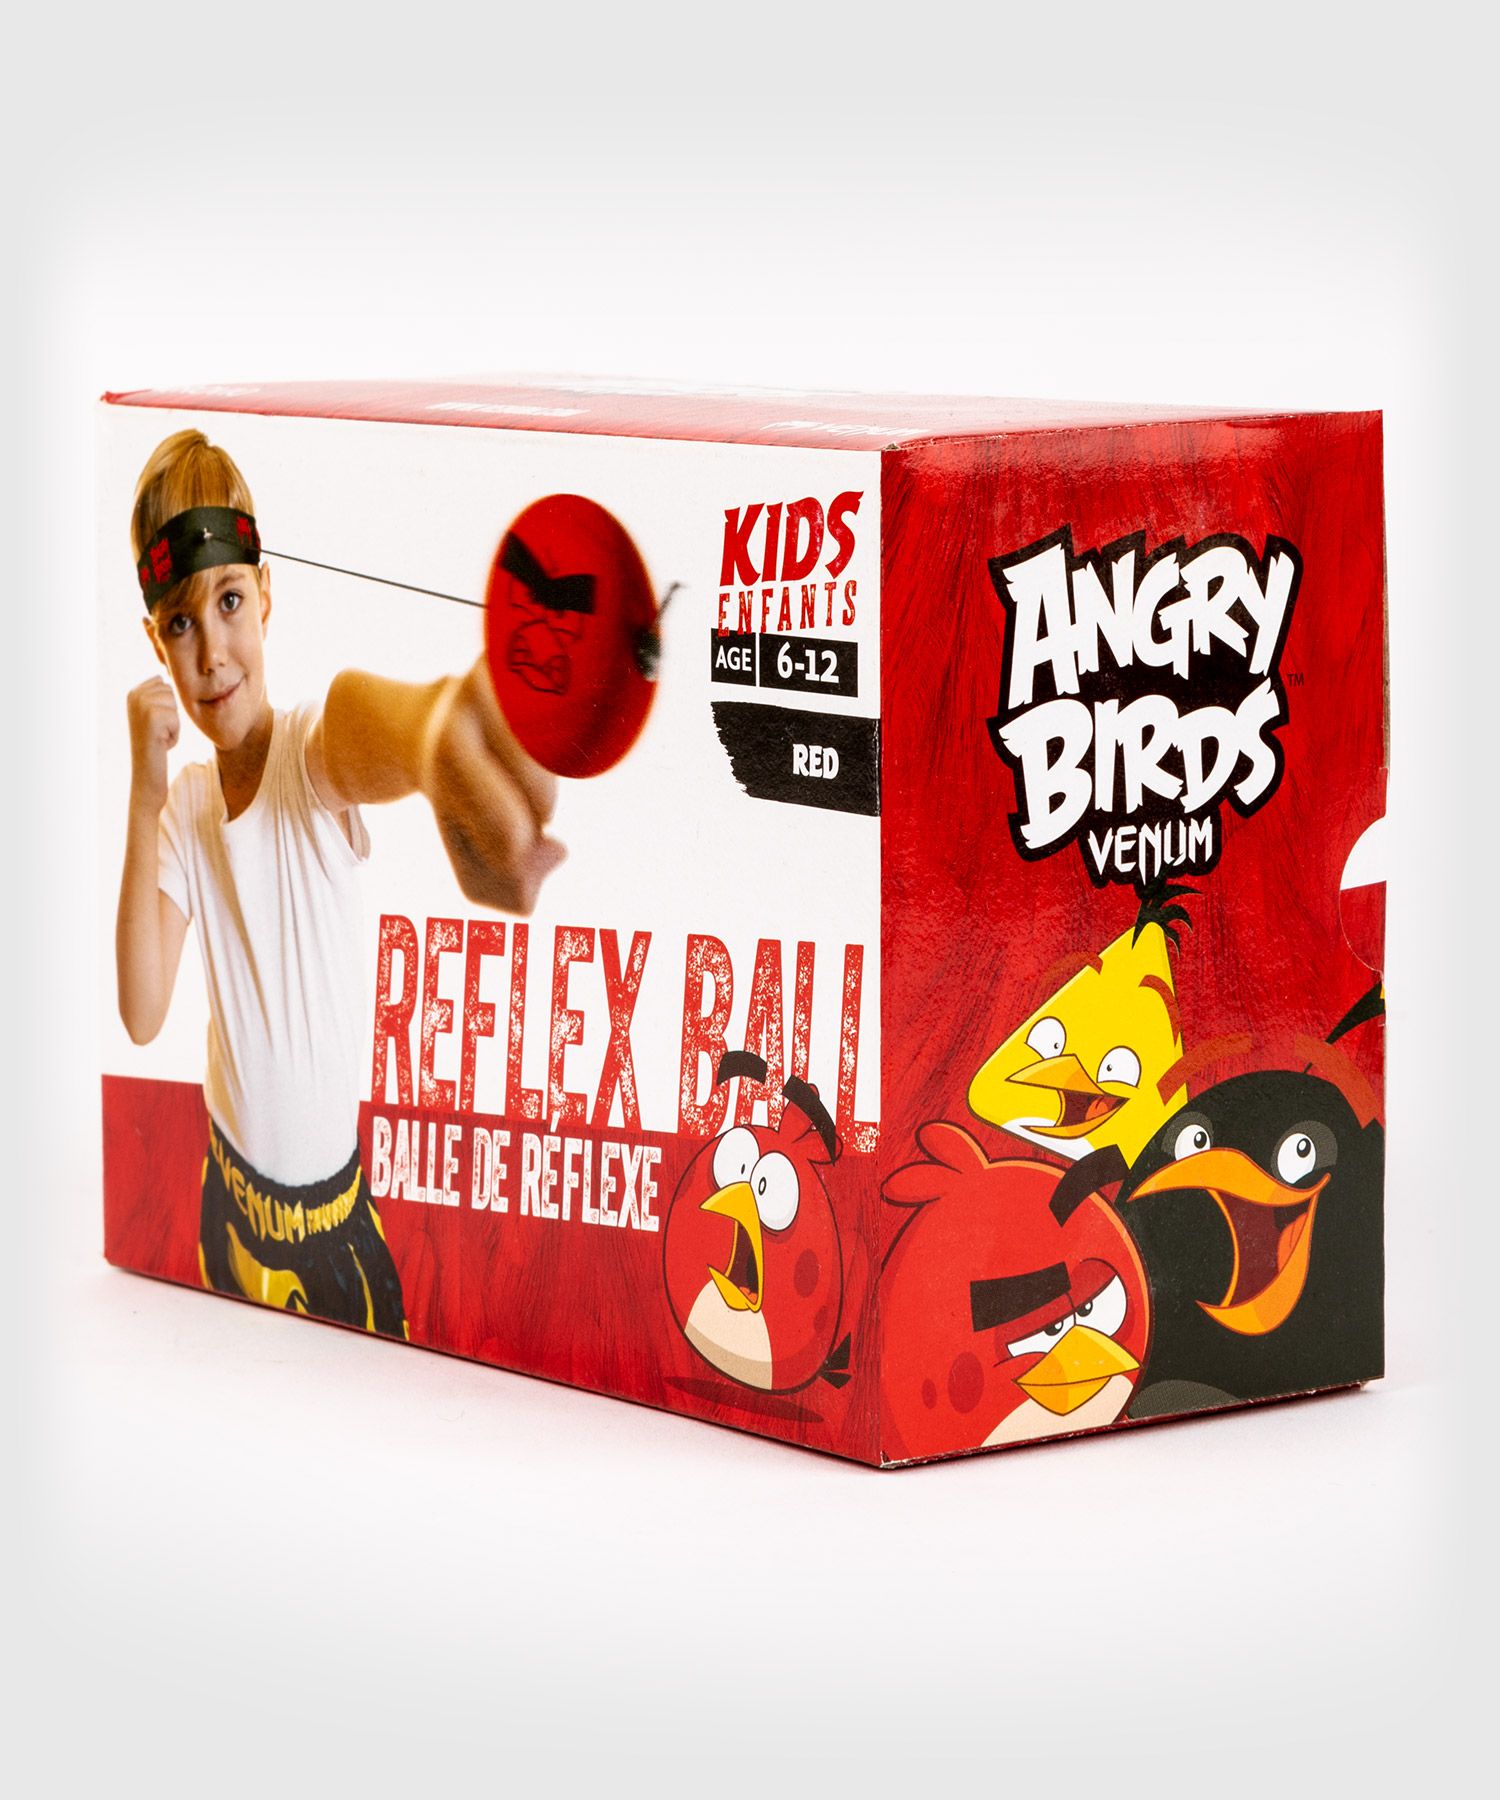 Venum Angry Birds Kids Reflex Ball Venum